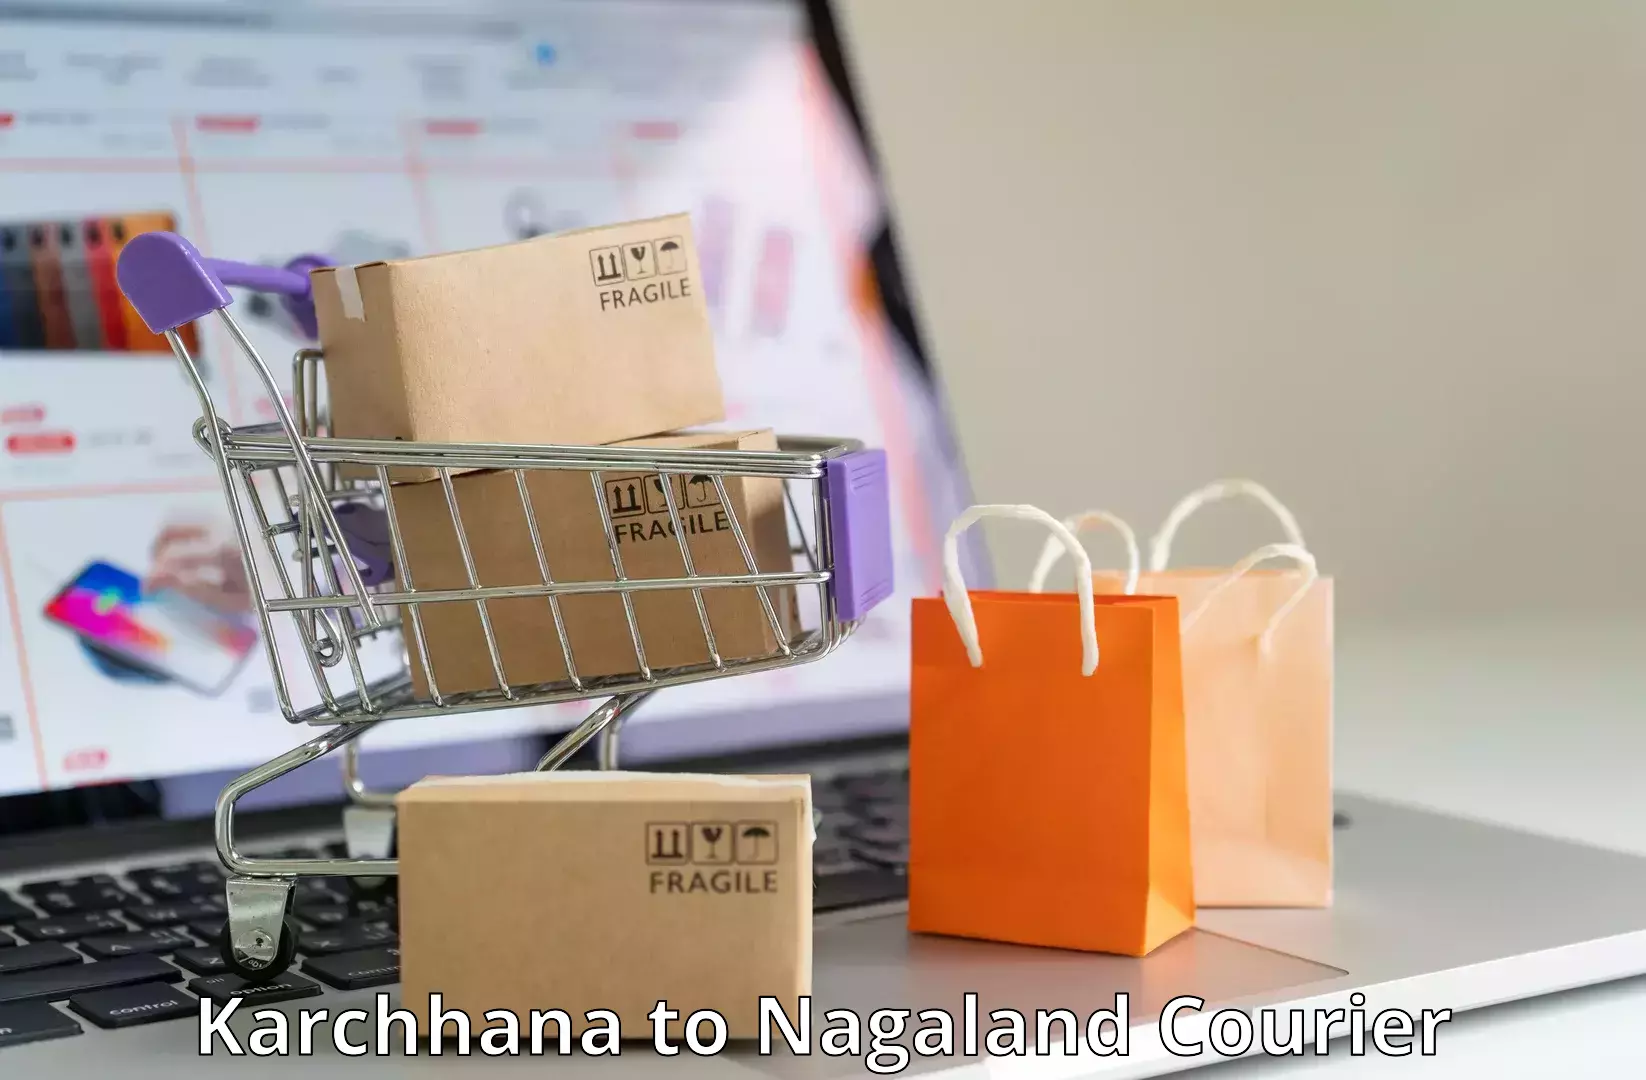 Express logistics providers Karchhana to Nagaland